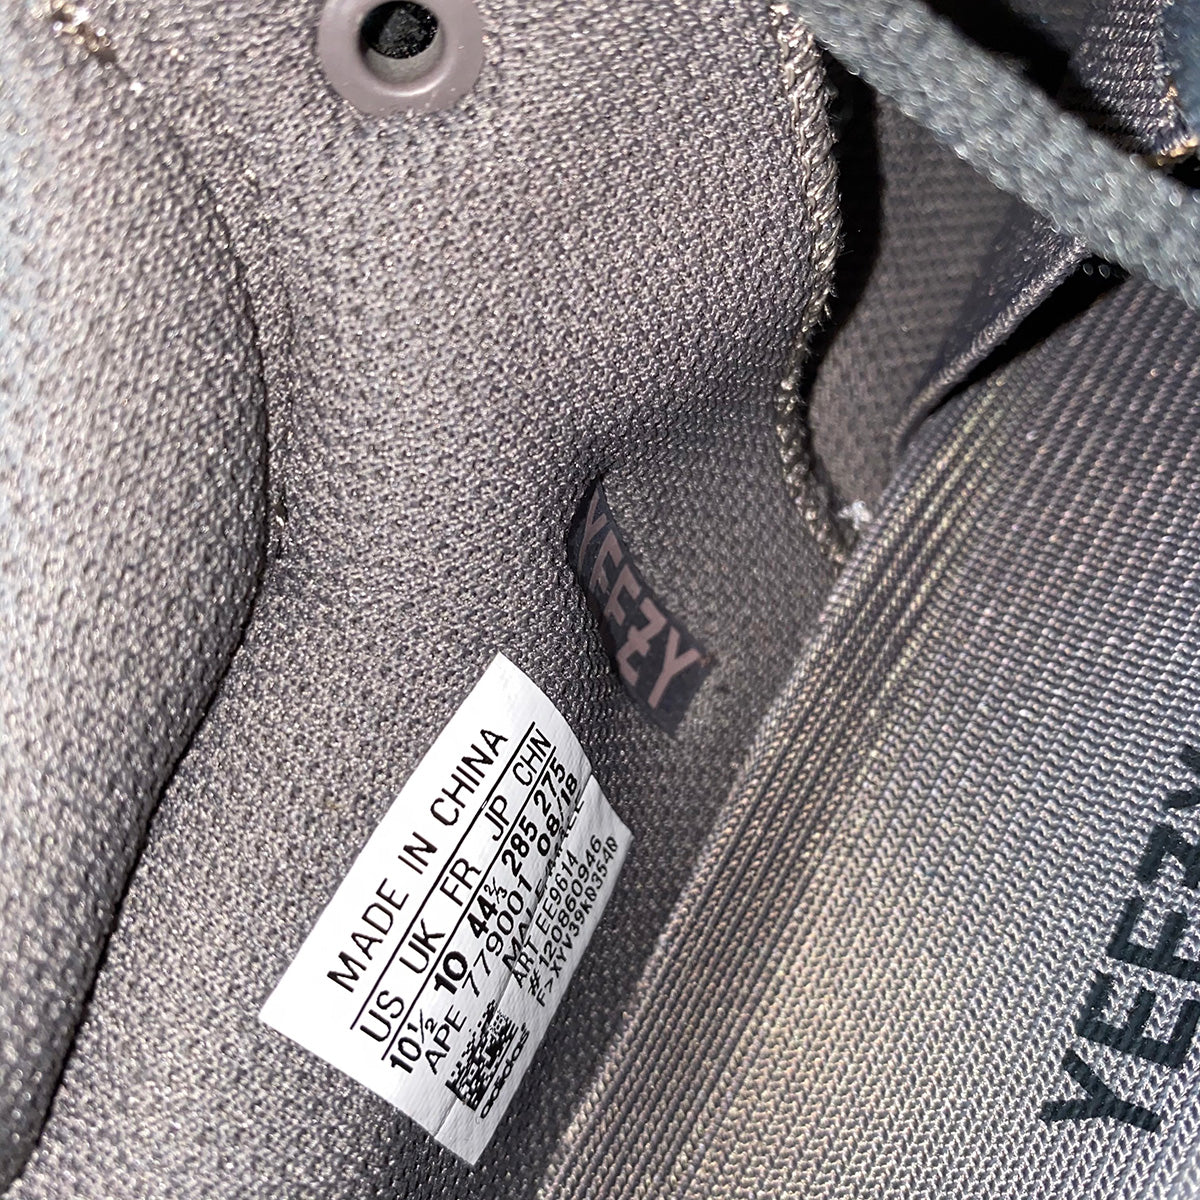 Adidas Yeezy Boost 700 'Mauve'